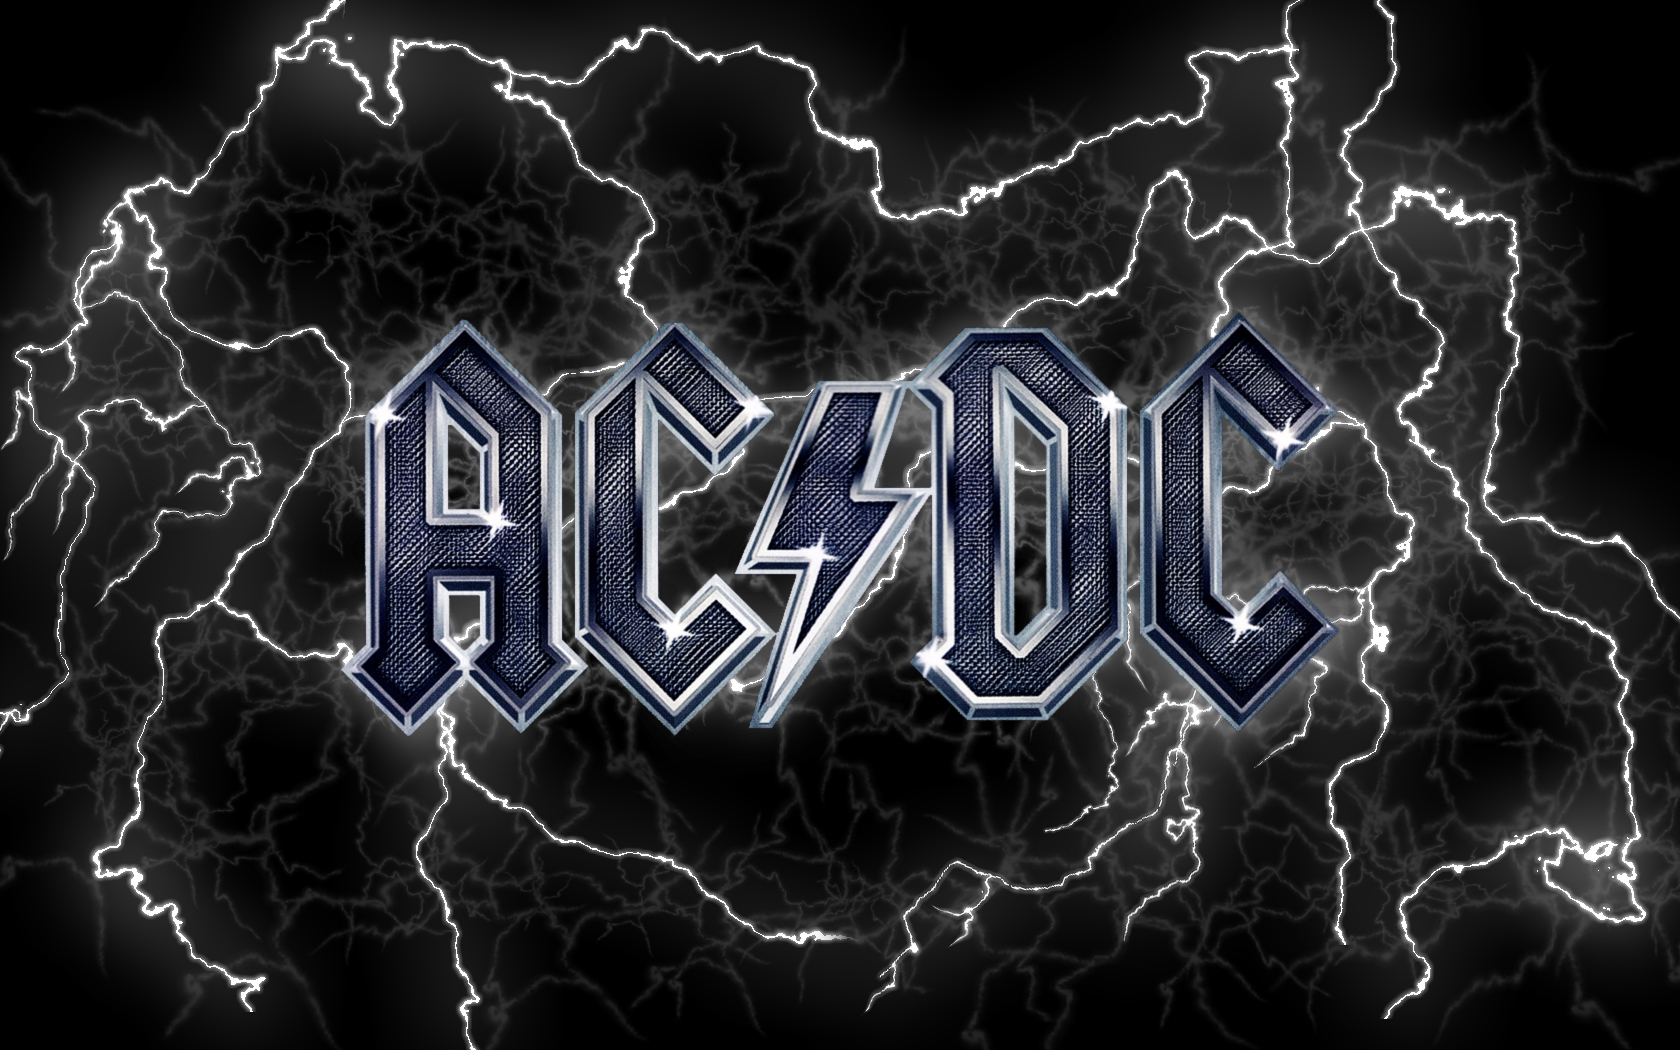 ac/dc, music, lightning, steel, white